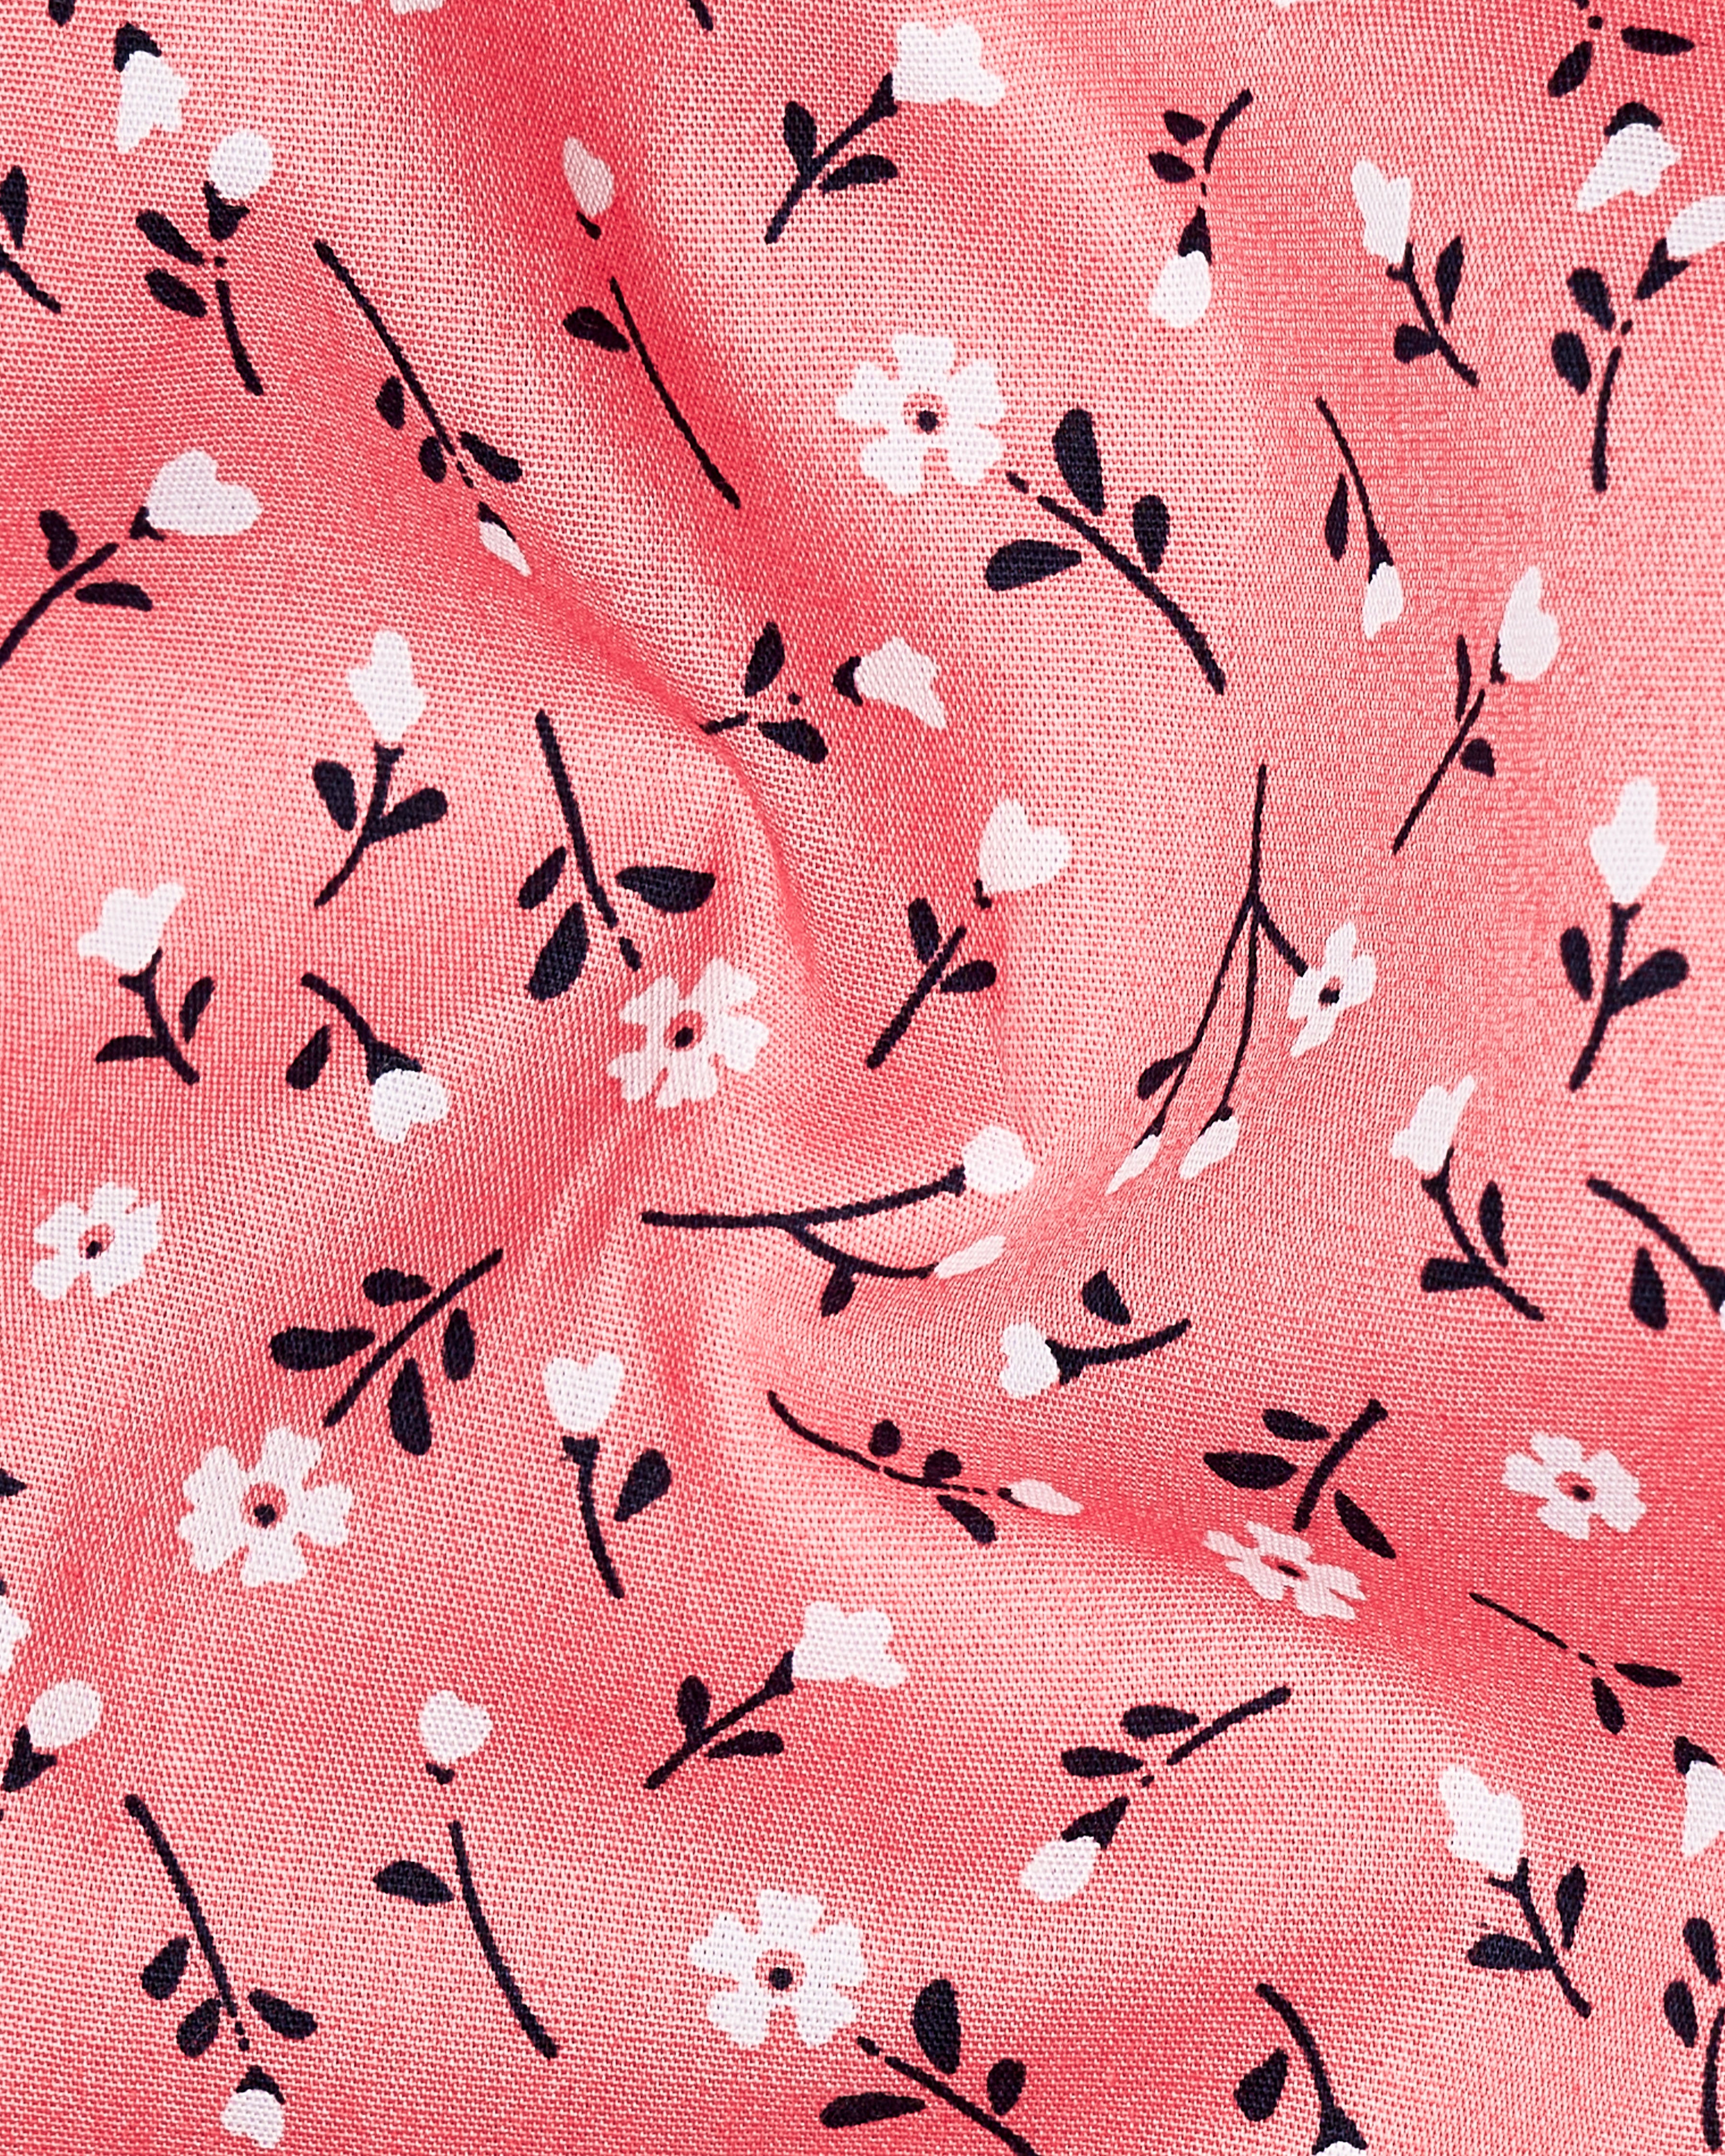 Coral Pink Ditsy Printed Premium Cotton Shirt WS024-M-32, WS024-M-34, WS024-M-36, WS024-M-38, WS024-M-40, WS024-M-42